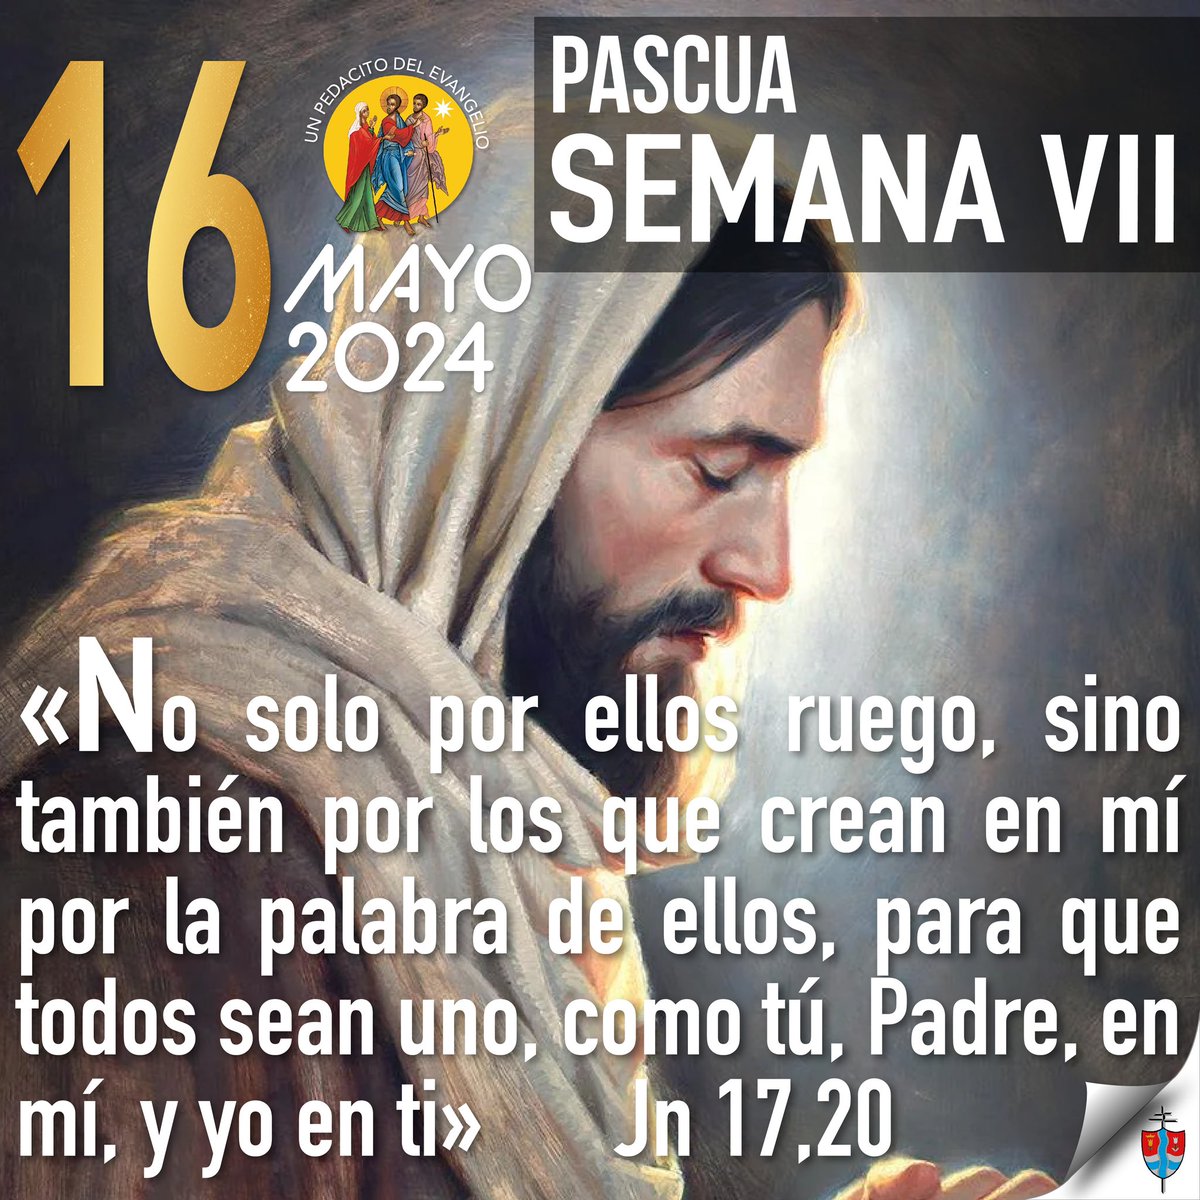 🛐 Un pedacito de Evangelio mayo 16 de 2024•Semana VII de Pascua

#Evangeliodeldía #Pascua #TuPalabraDaVida